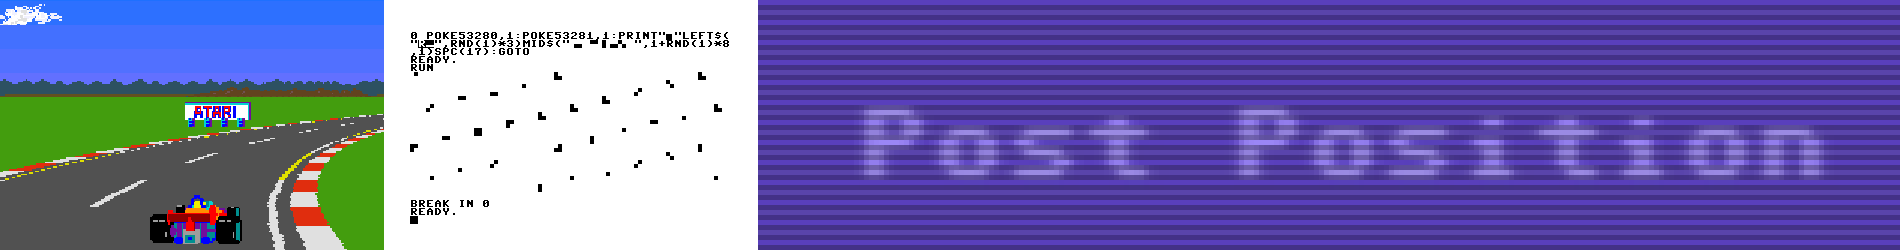 Post Position (Pole Position game image, visual poem based on Morrellet's artwork, C64 logotype)